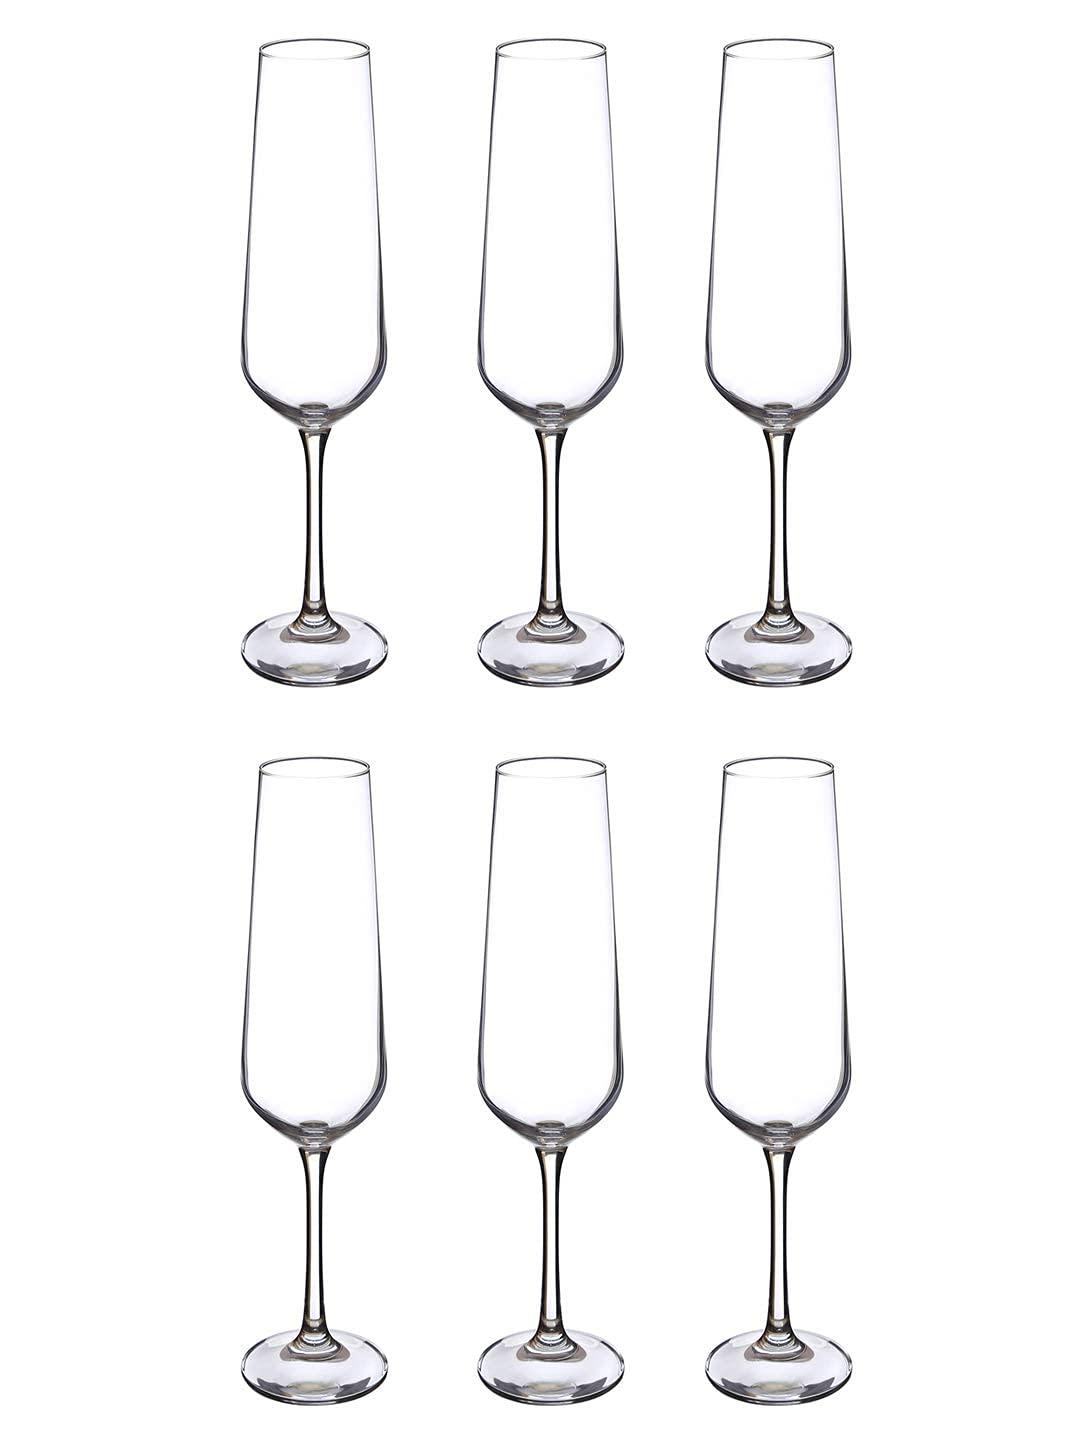 Bohemia Crystal Sandra Champagne Flute Set, 200ml, Set of 6pcs, Transparent, Non Lead Crystal Glass | Champagne Flute